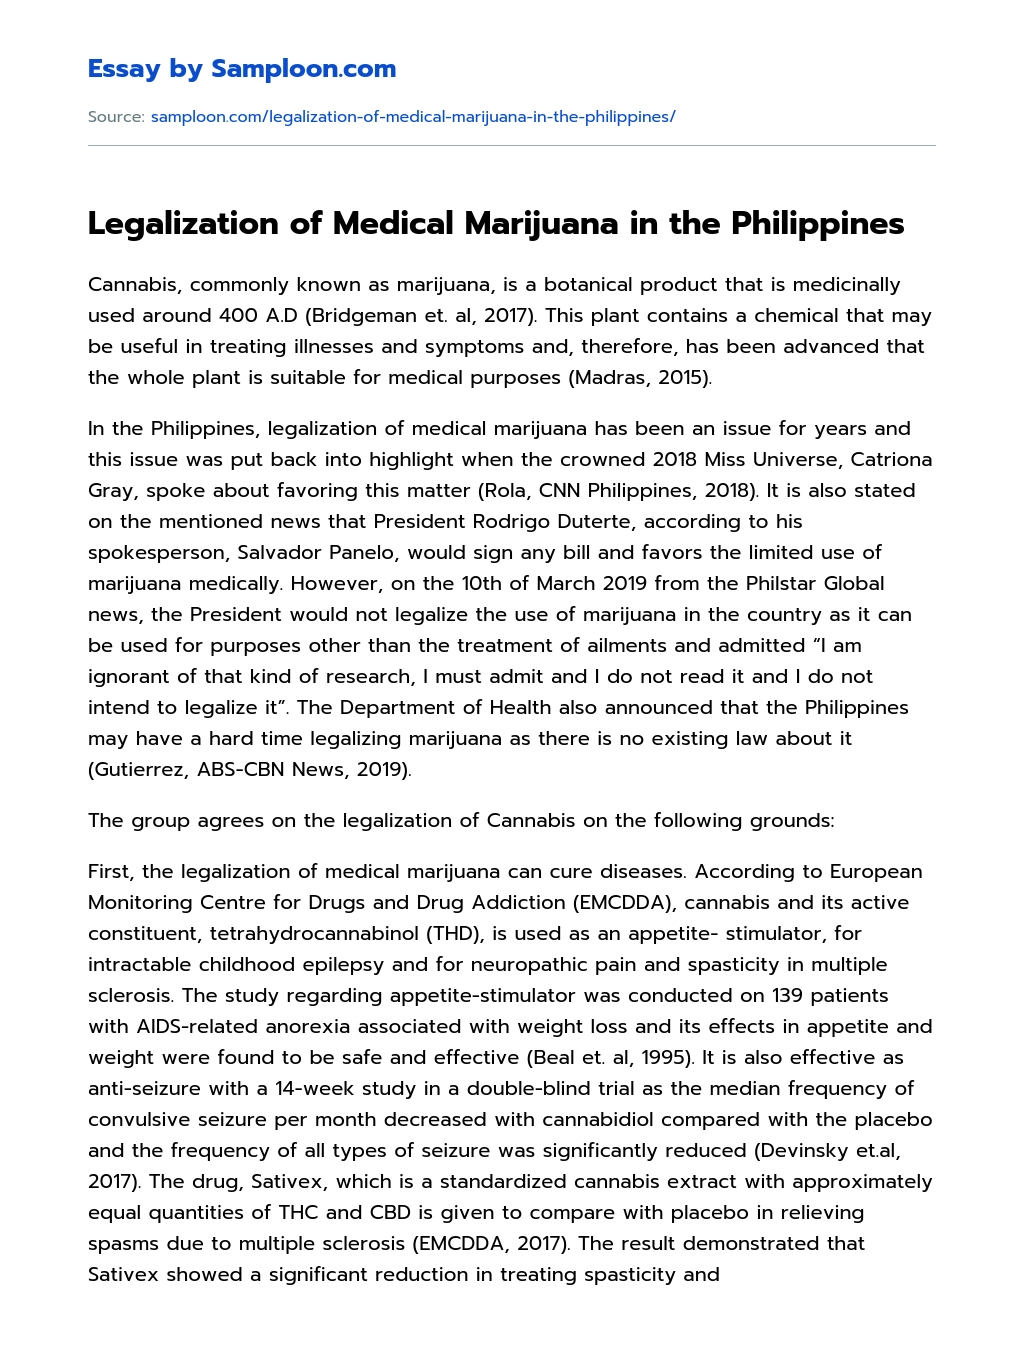 Legalization of Medical Marijuana in the Philippines essay